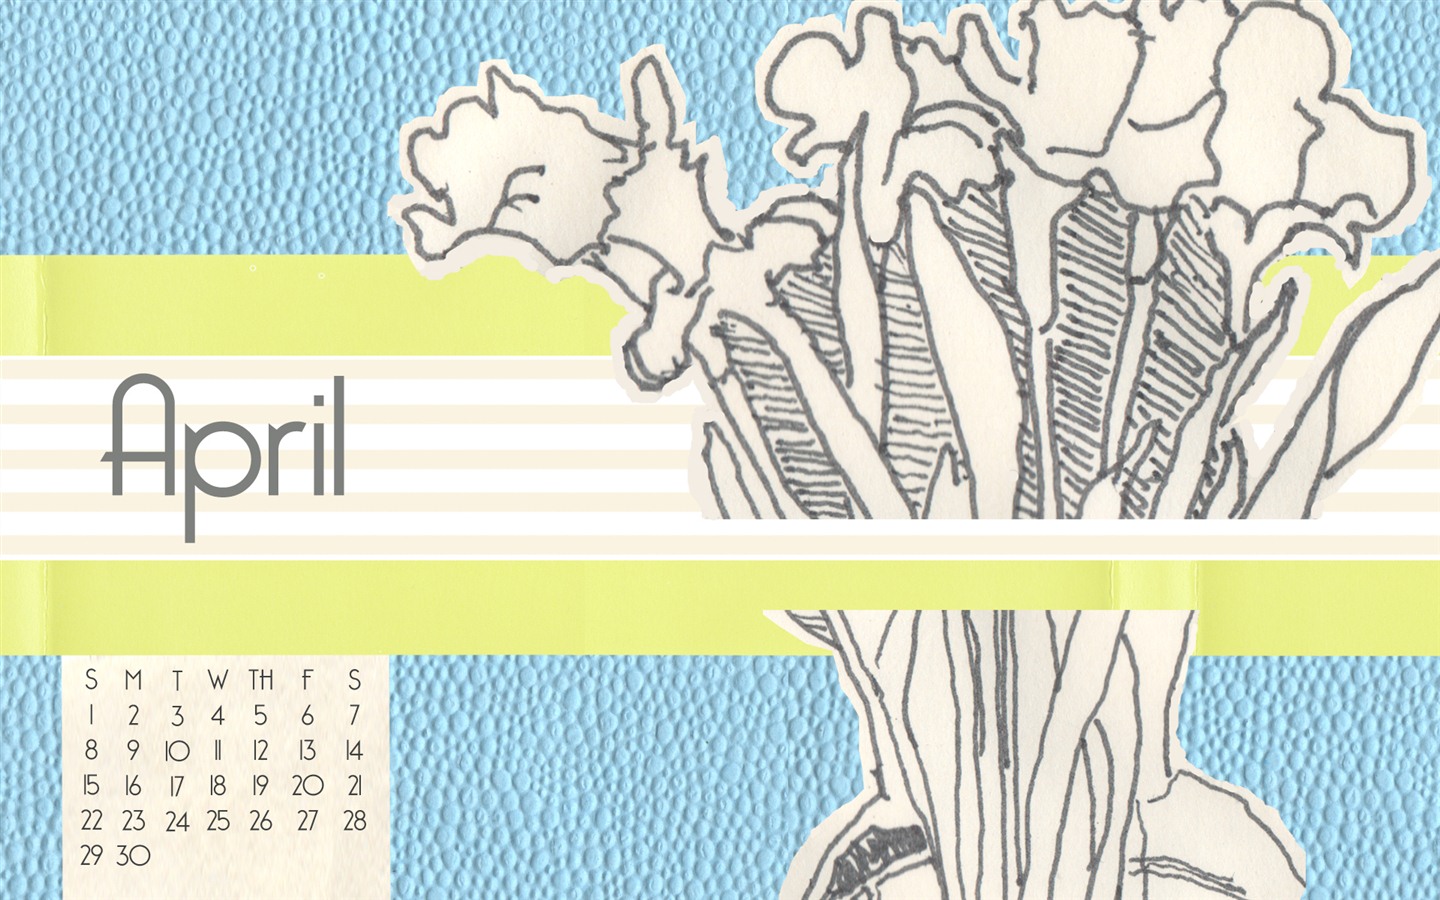 April 2012 calendar wallpapers (1) #2 - 1440x900